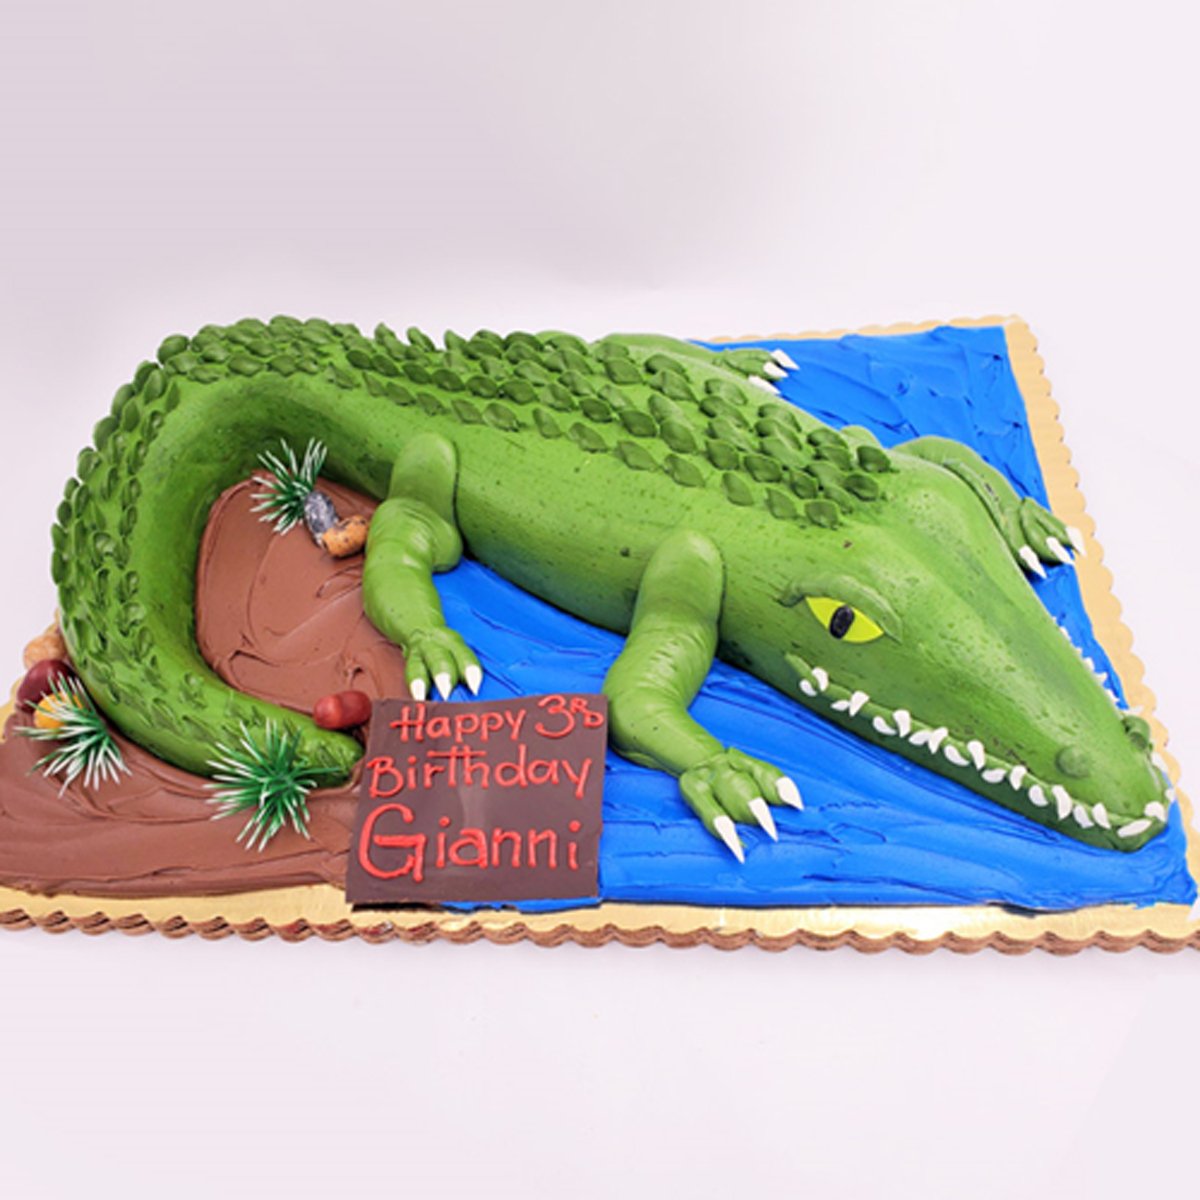 Alligator cupcake cake 2dz